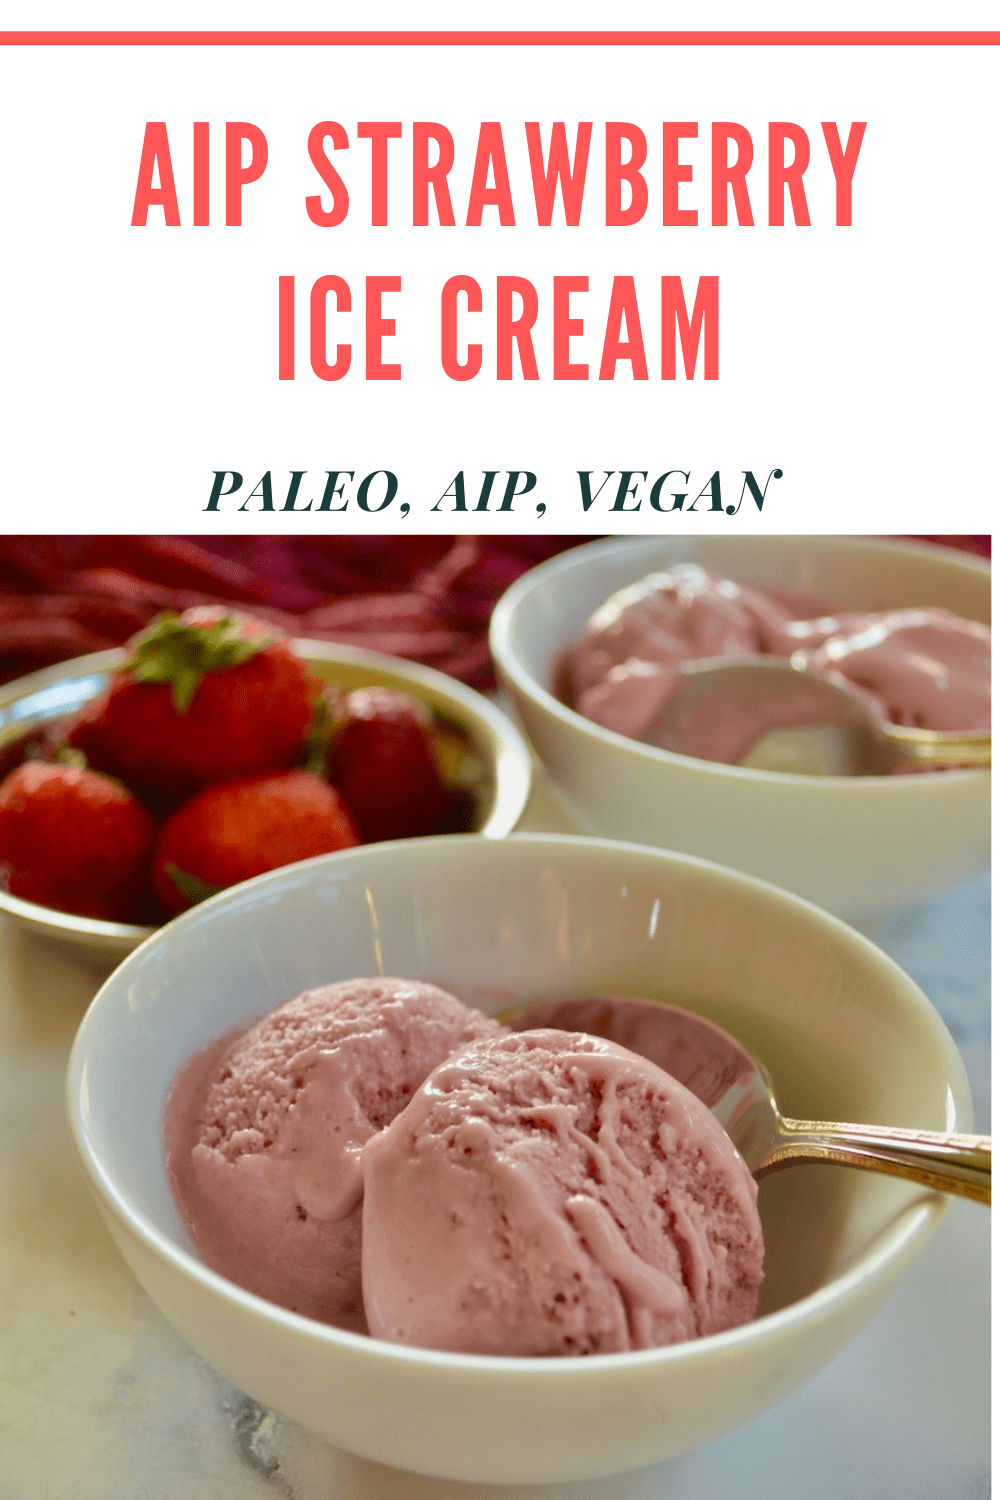 https://cook2nourish.com/wp-content/uploads/2021/09/aip-strawberry-ice-cream.png